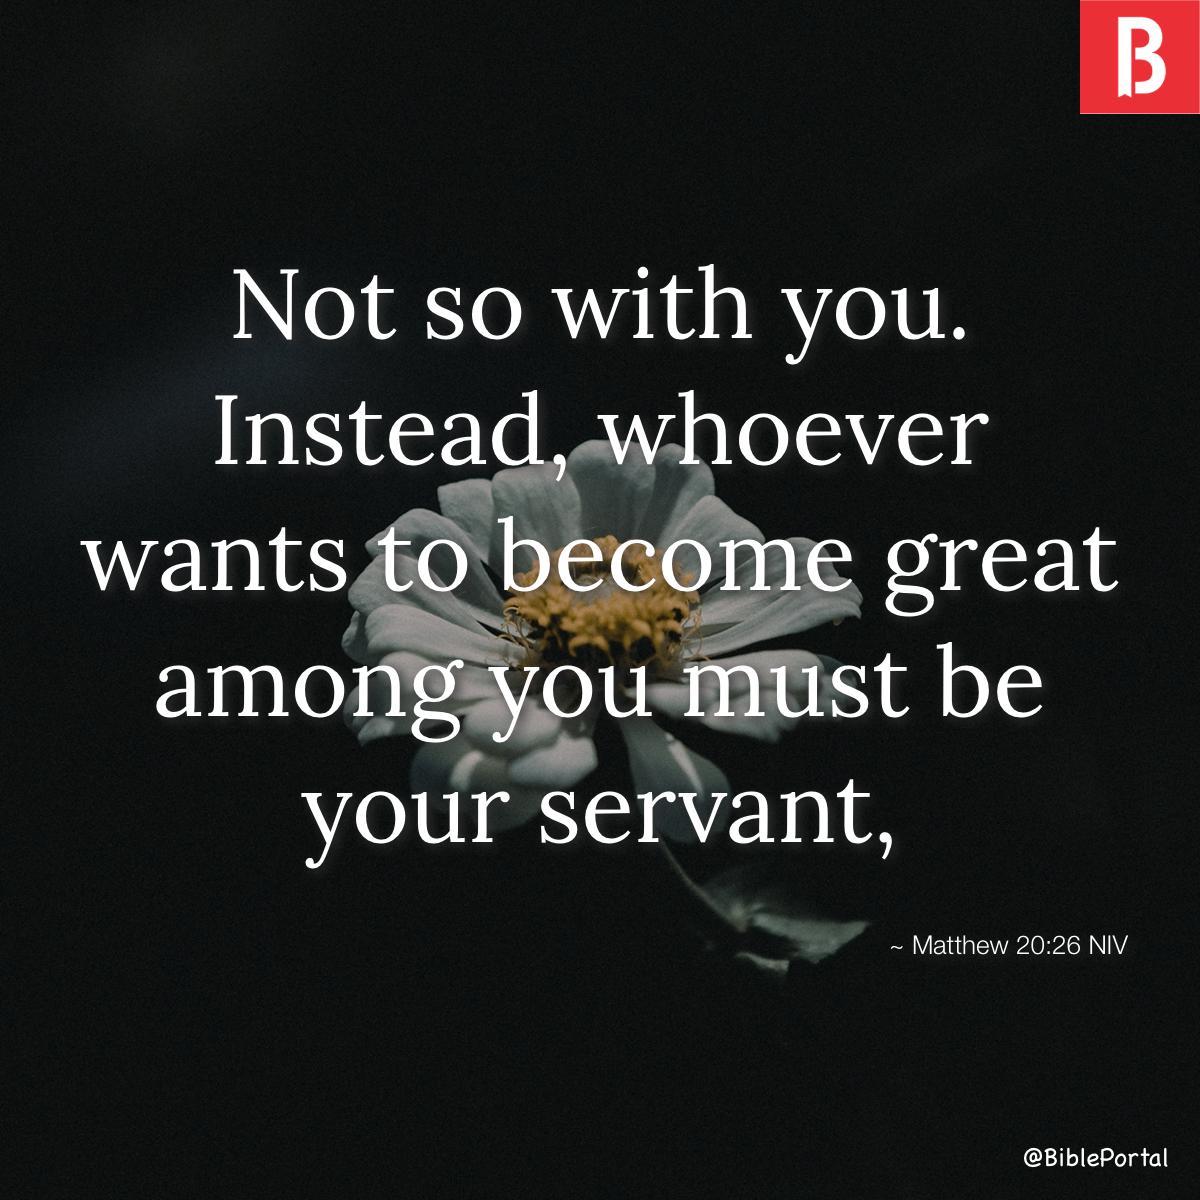 Matthew 20:26 NIV